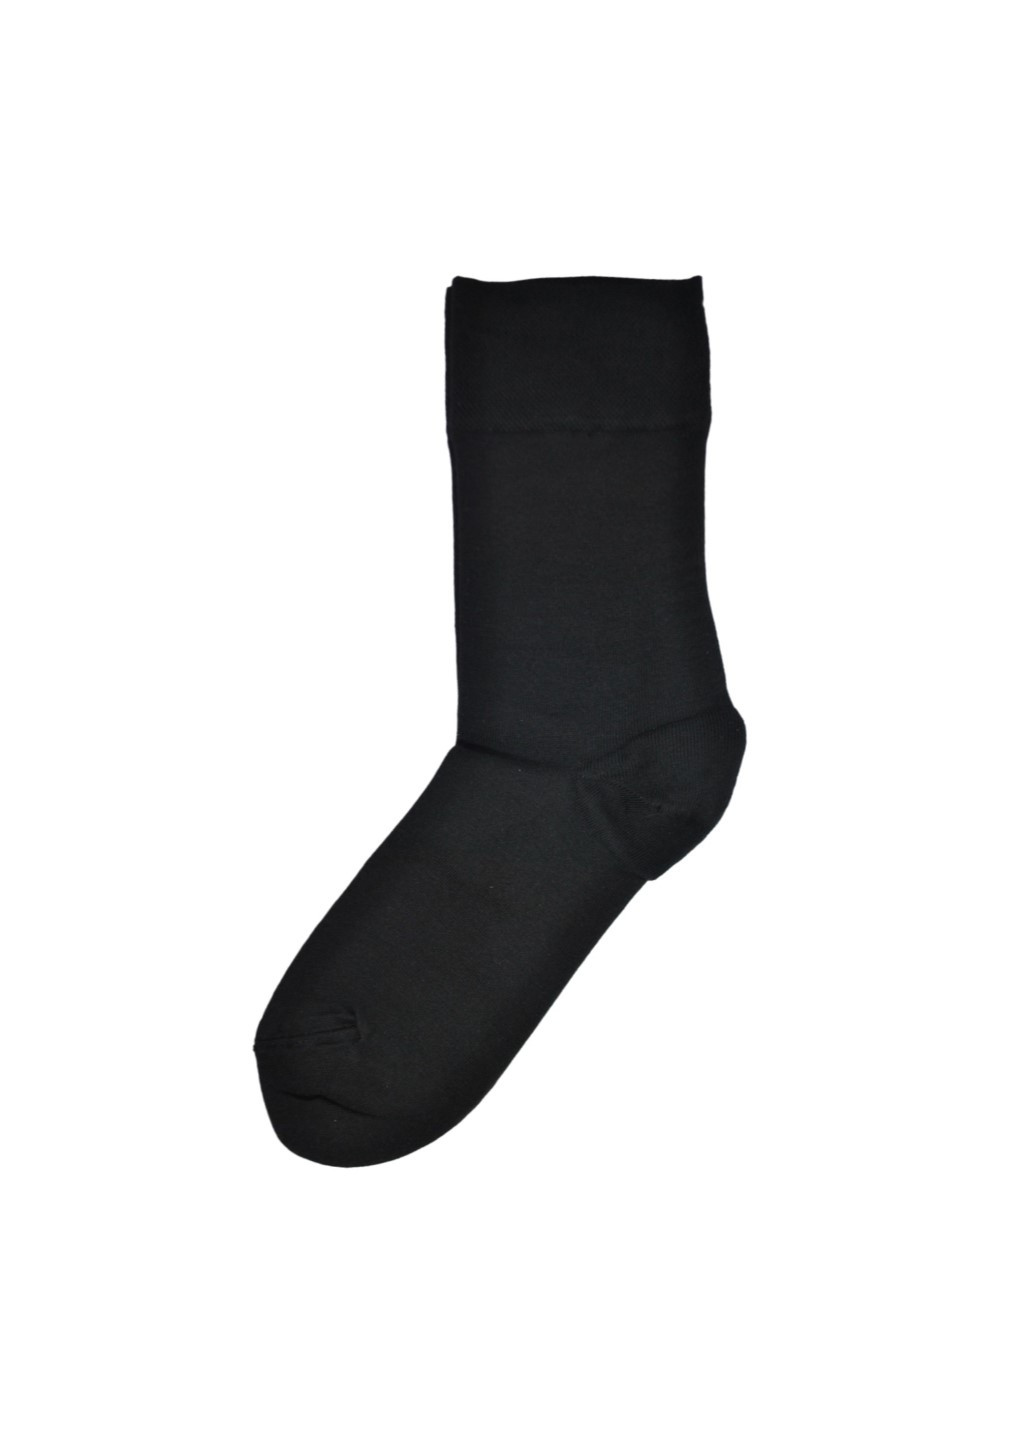 NTF Шкарпетки чол. (середньої довжини) MS3C/Sl-cl, р.39-42, black MZ ms3c-sl-cl (259643347)